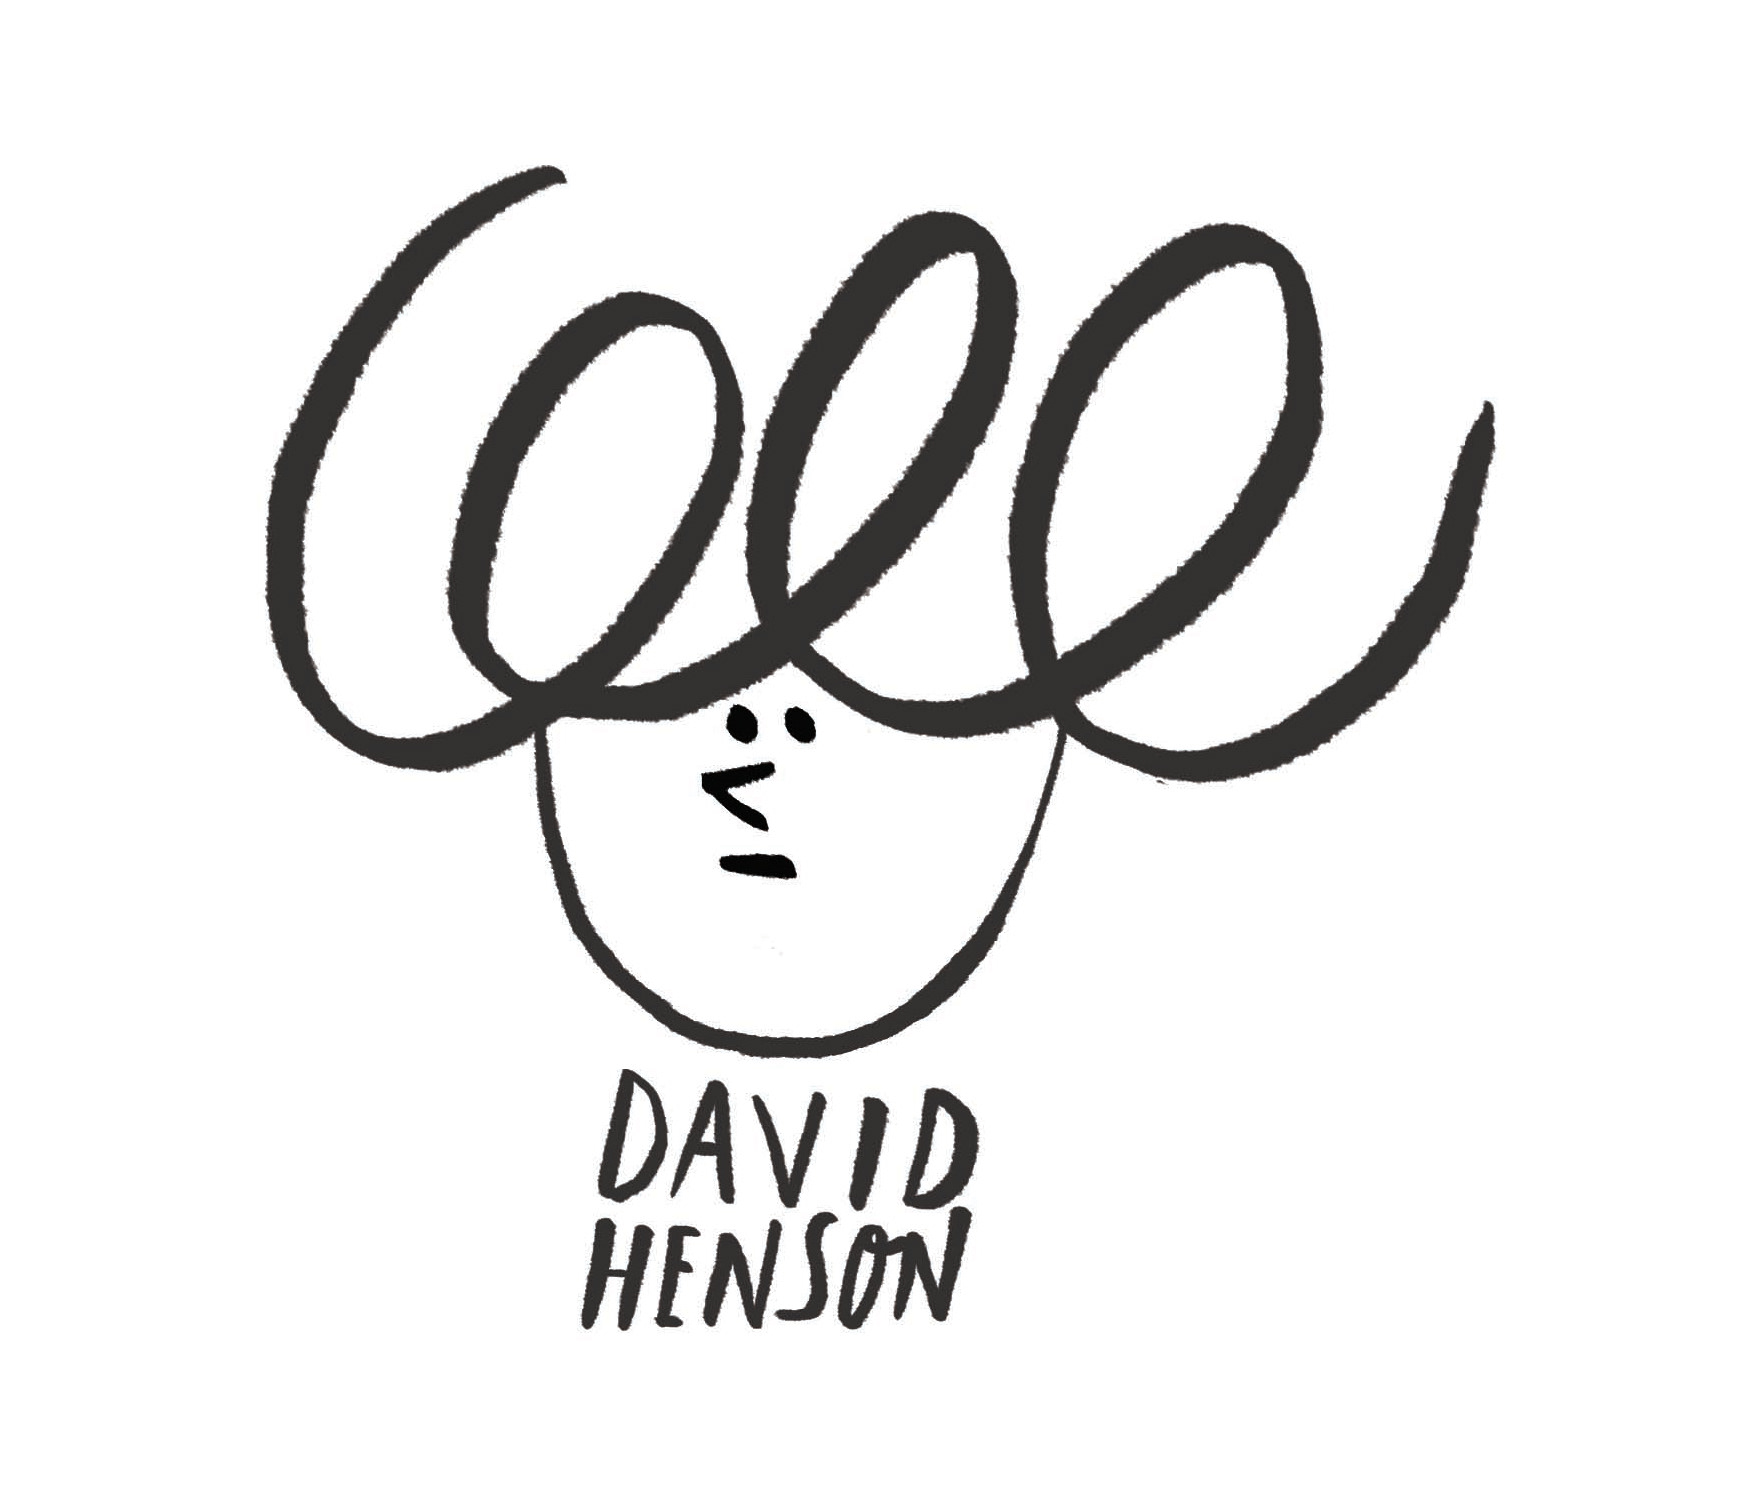 David Henson